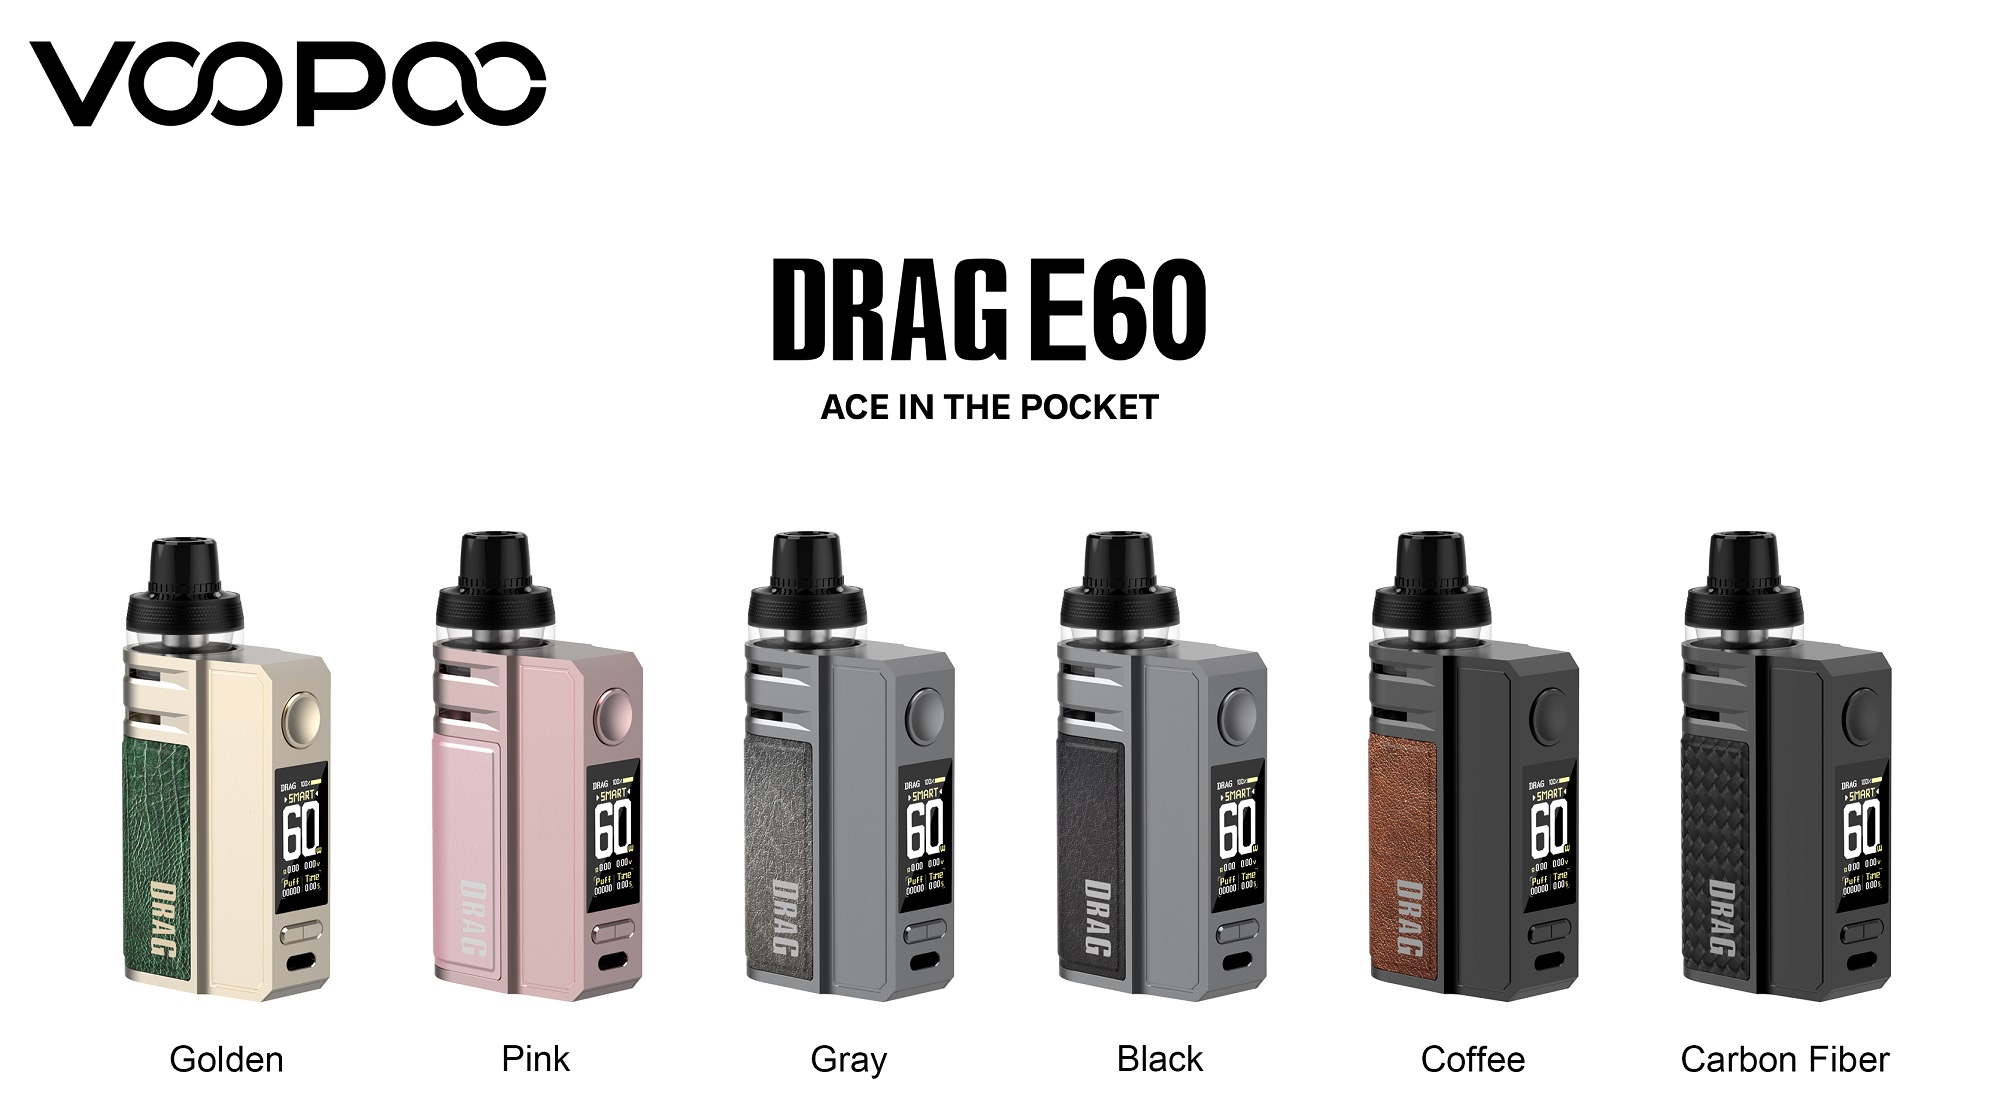 drag e60 colors